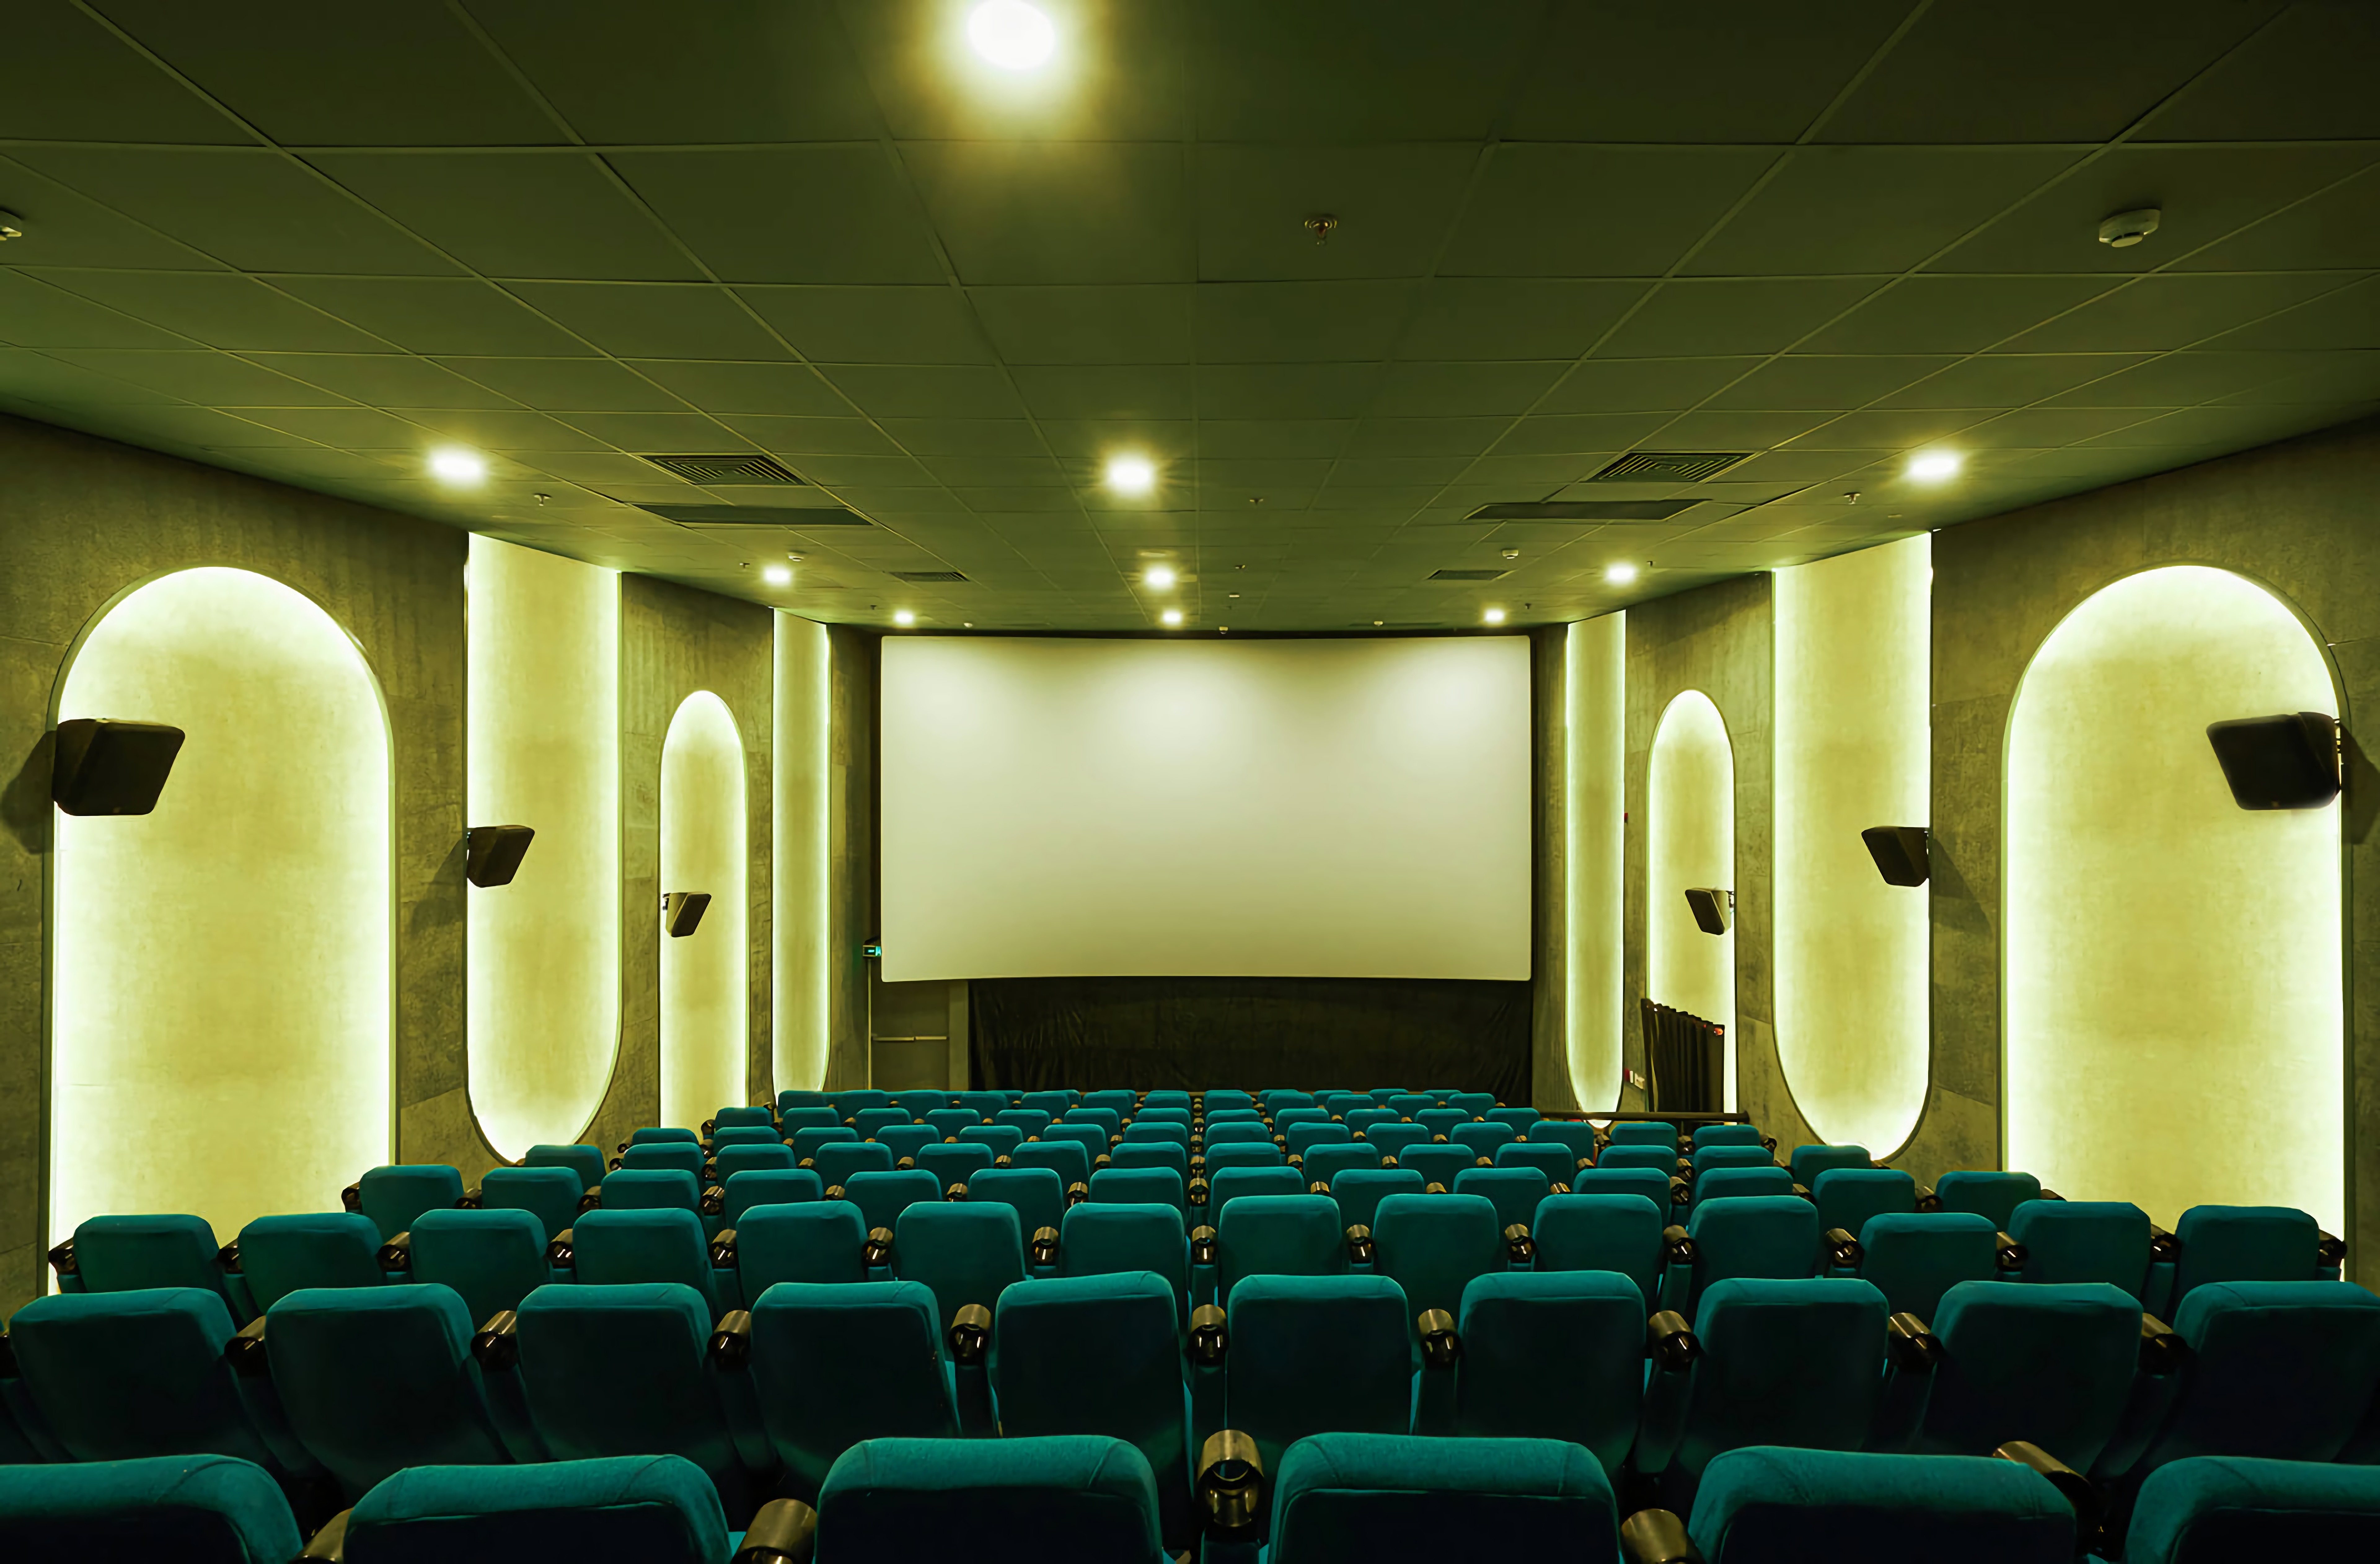 Beta Cinema: Movie viewing atmosphere in Saigon's Cheerful Historic Buildings